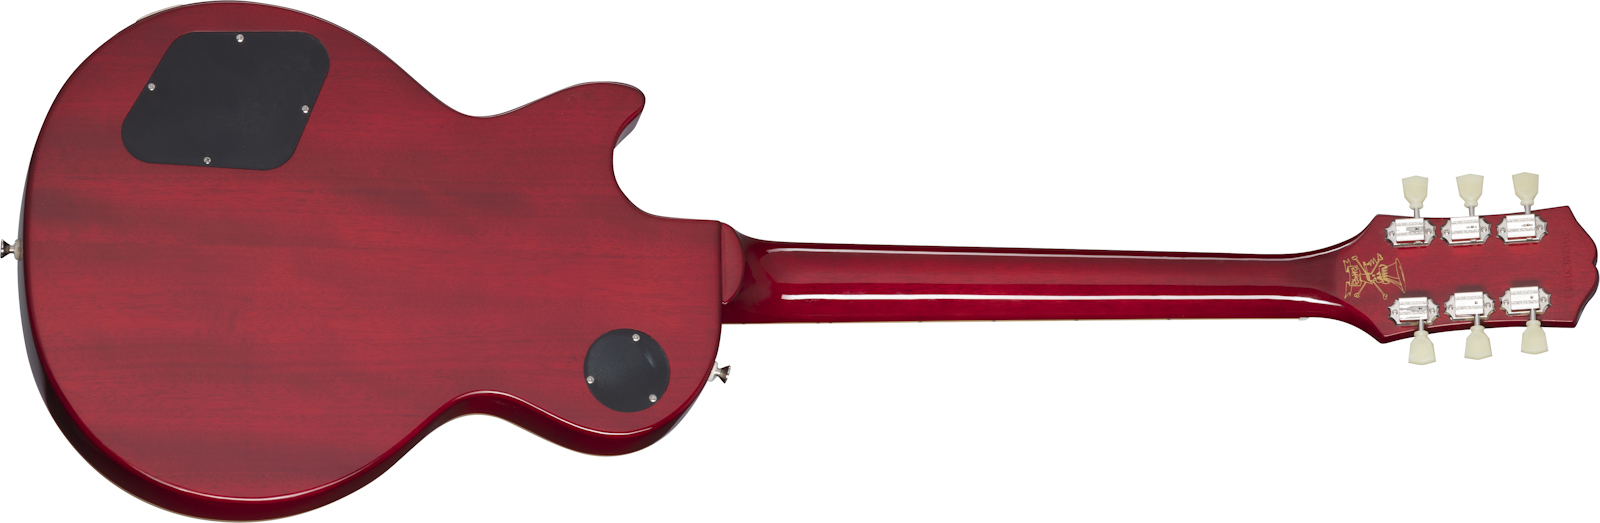 Epiphone Slash Les Paul Standard Signature 2h Ht Lau +etui - Appetite Burst - Single-Cut-E-Gitarre - Variation 1